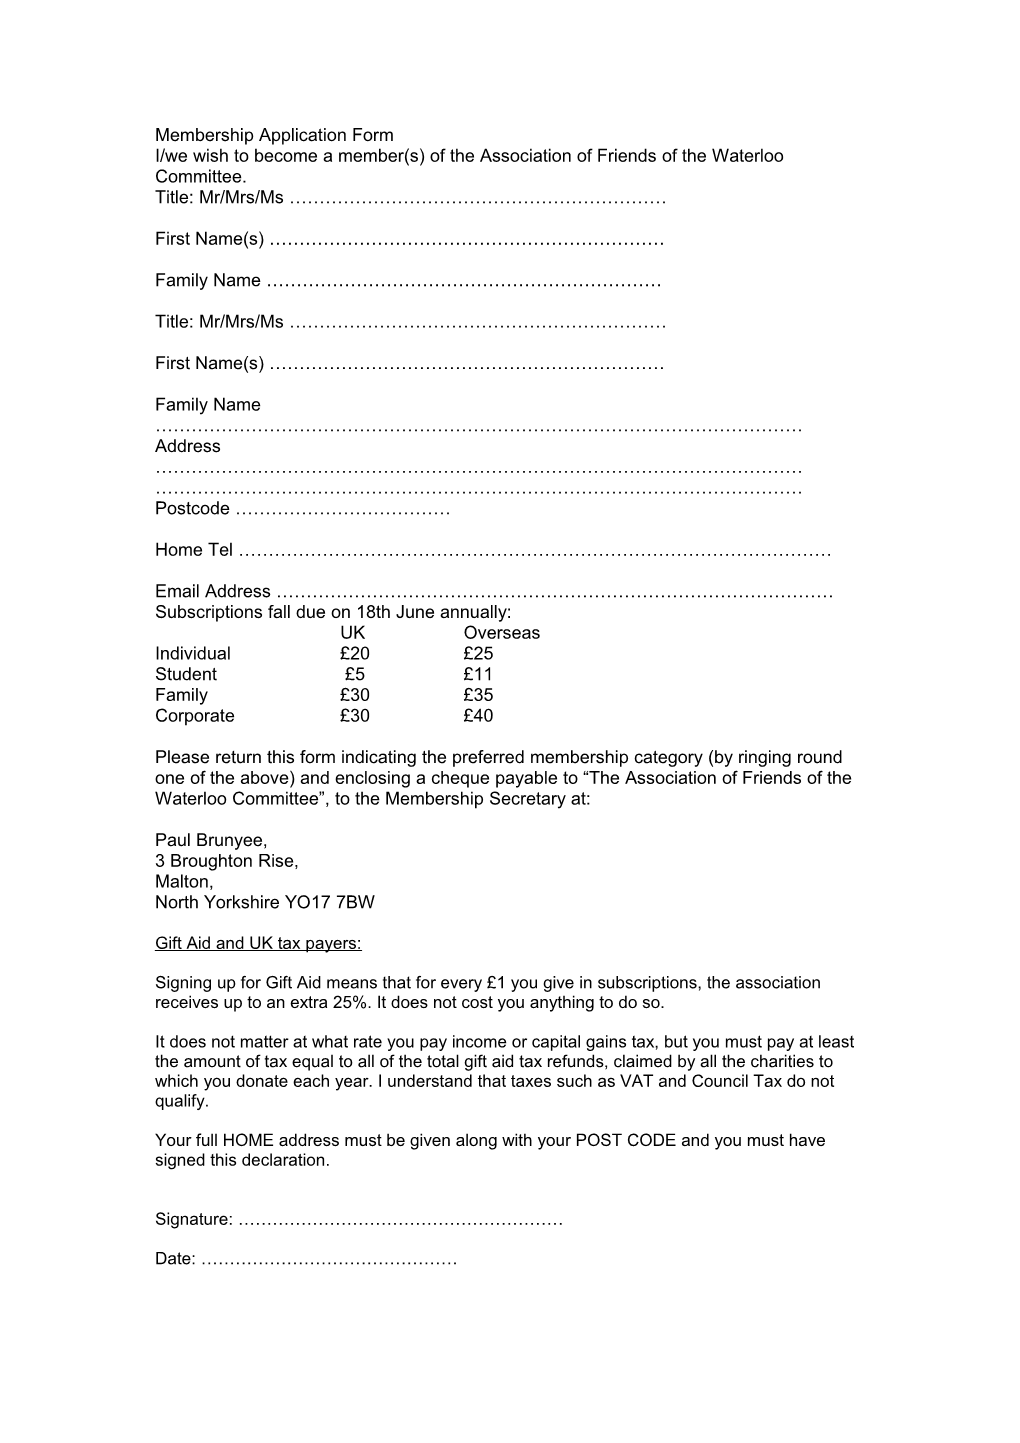 Membership Application Form s4